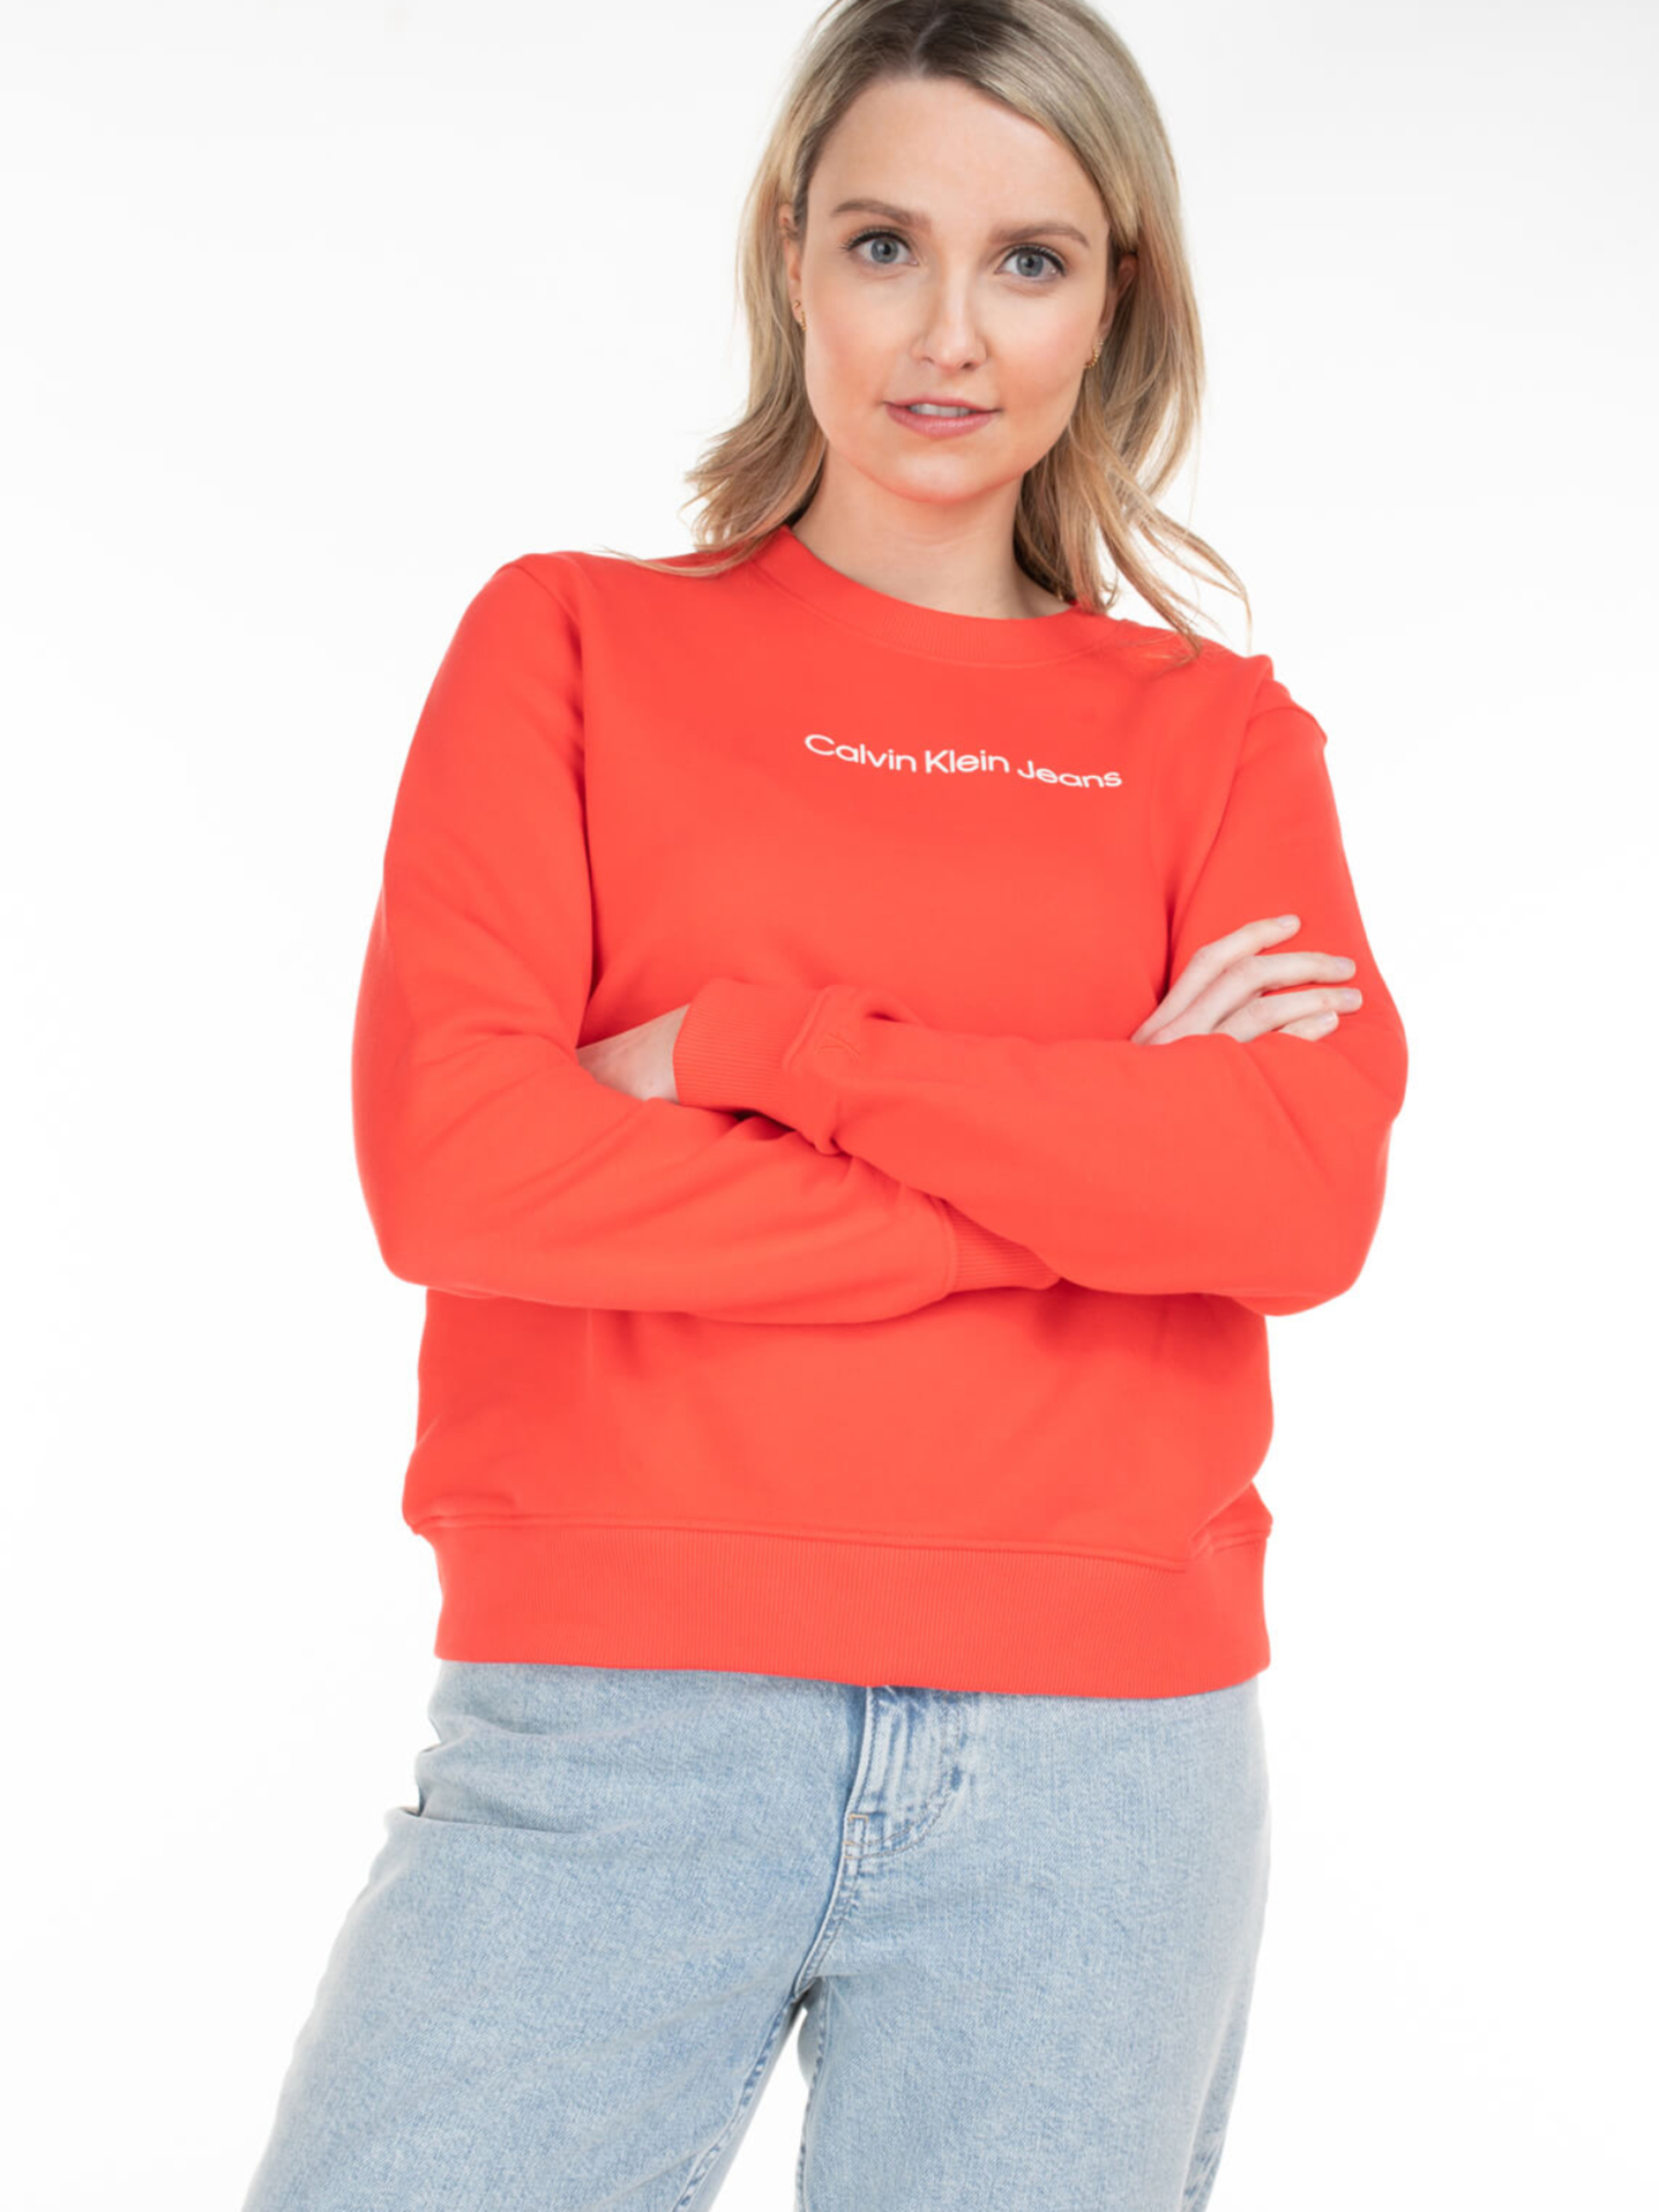 Calvin Klein dámská červená mikina - M (XL1)